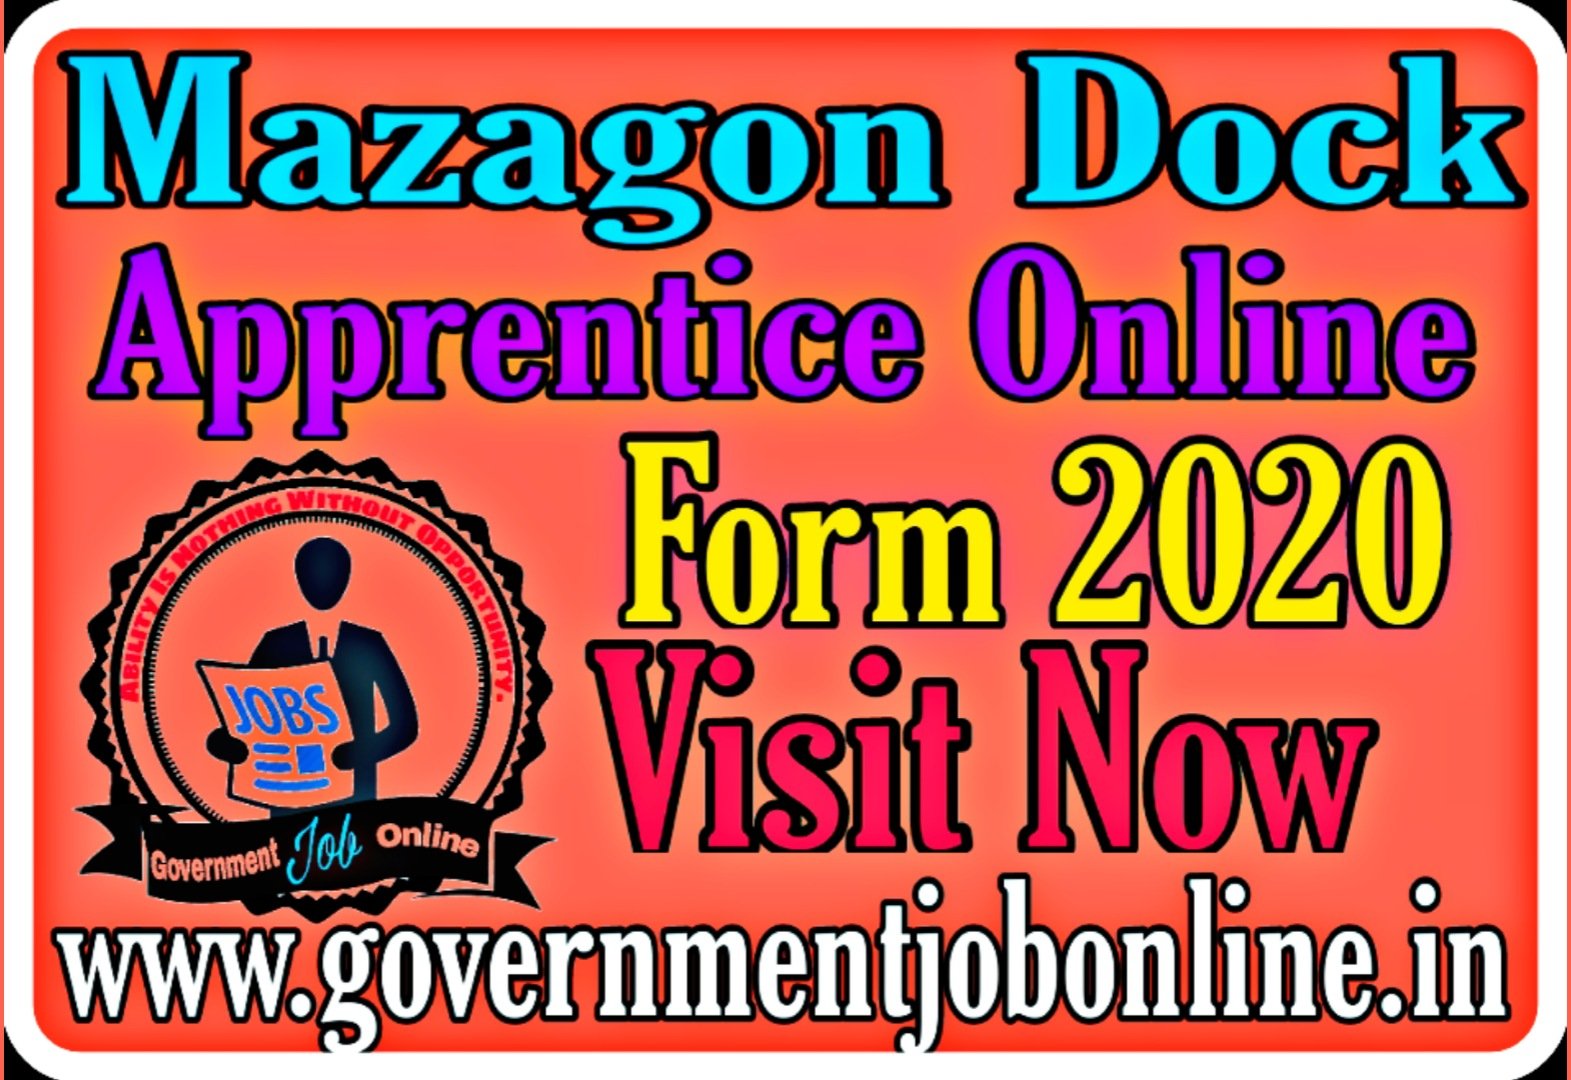 Mazagon Dock Apprentice Online Form 2020, Mazagon Dock Apprentice Online Form 2021